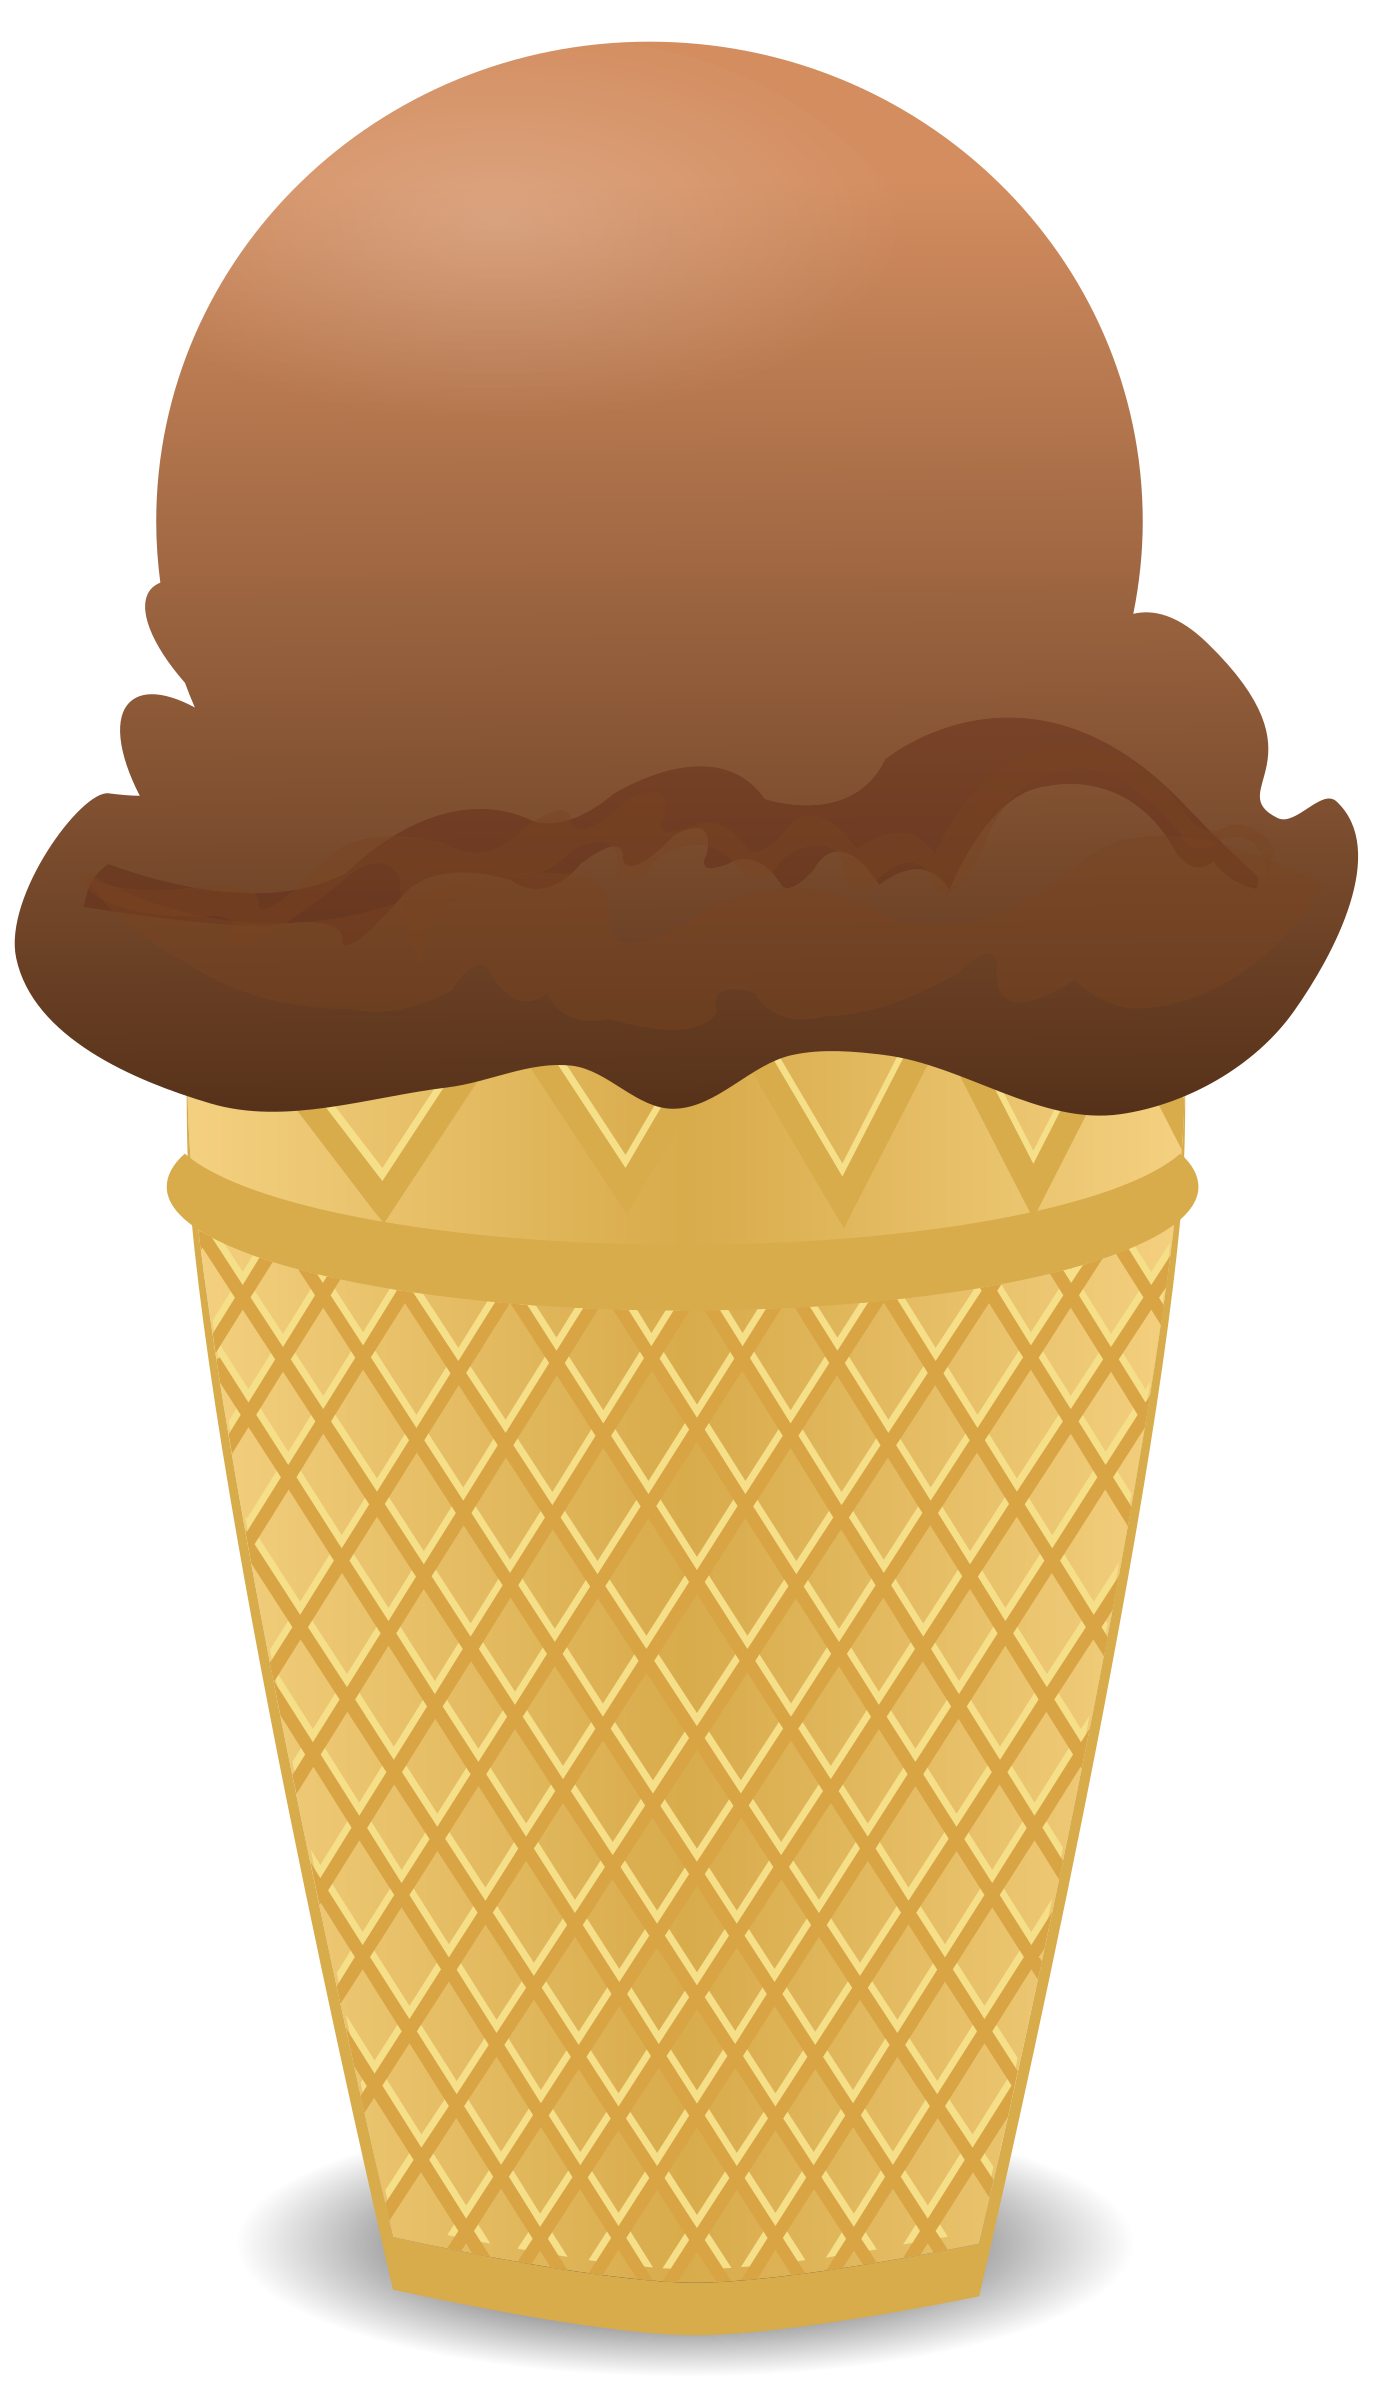 cup clipart ice cream